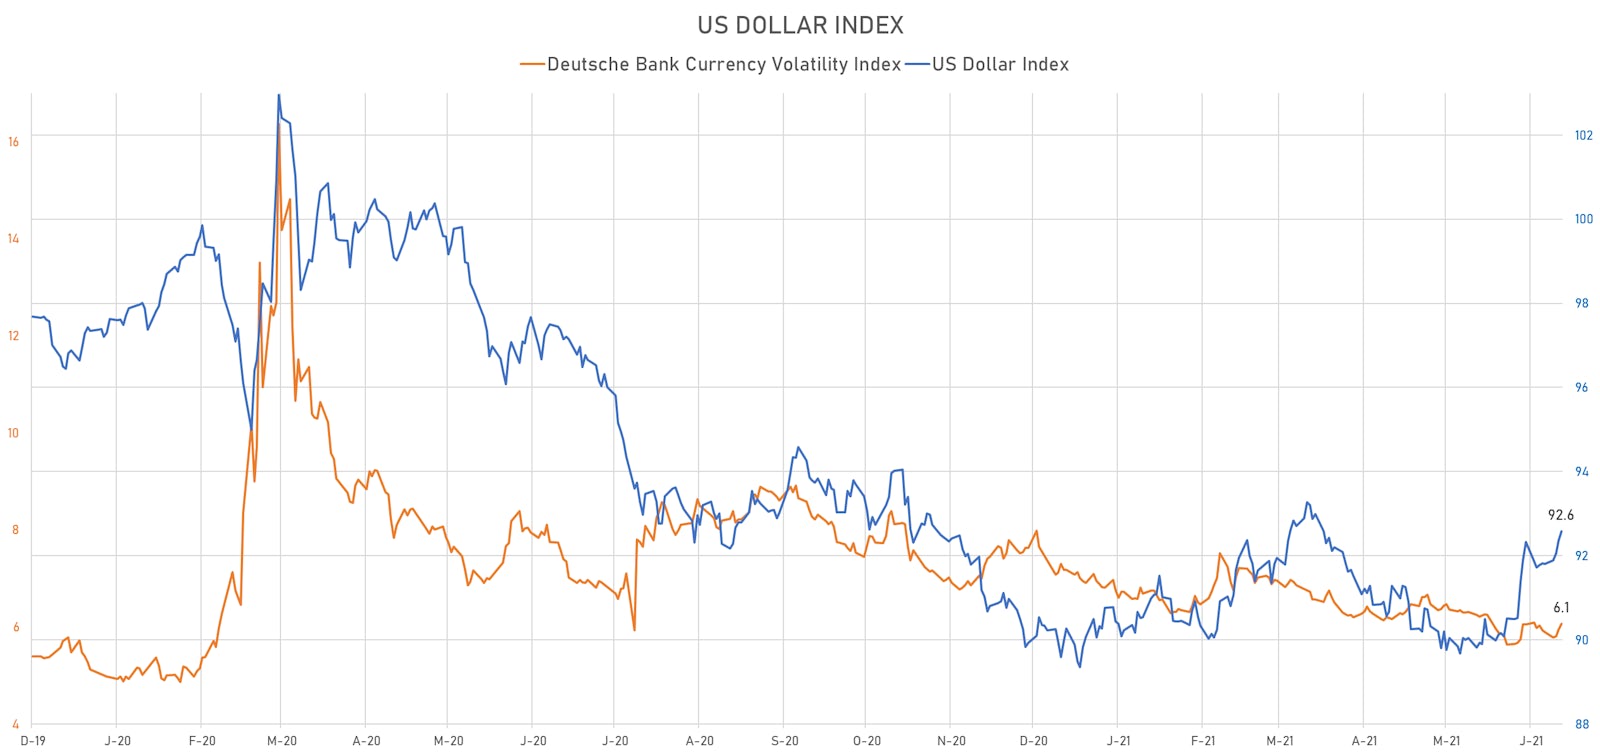 US Dollar Index & DB Currency Volatility Index | Sources: ϕpost, Refinitiv data